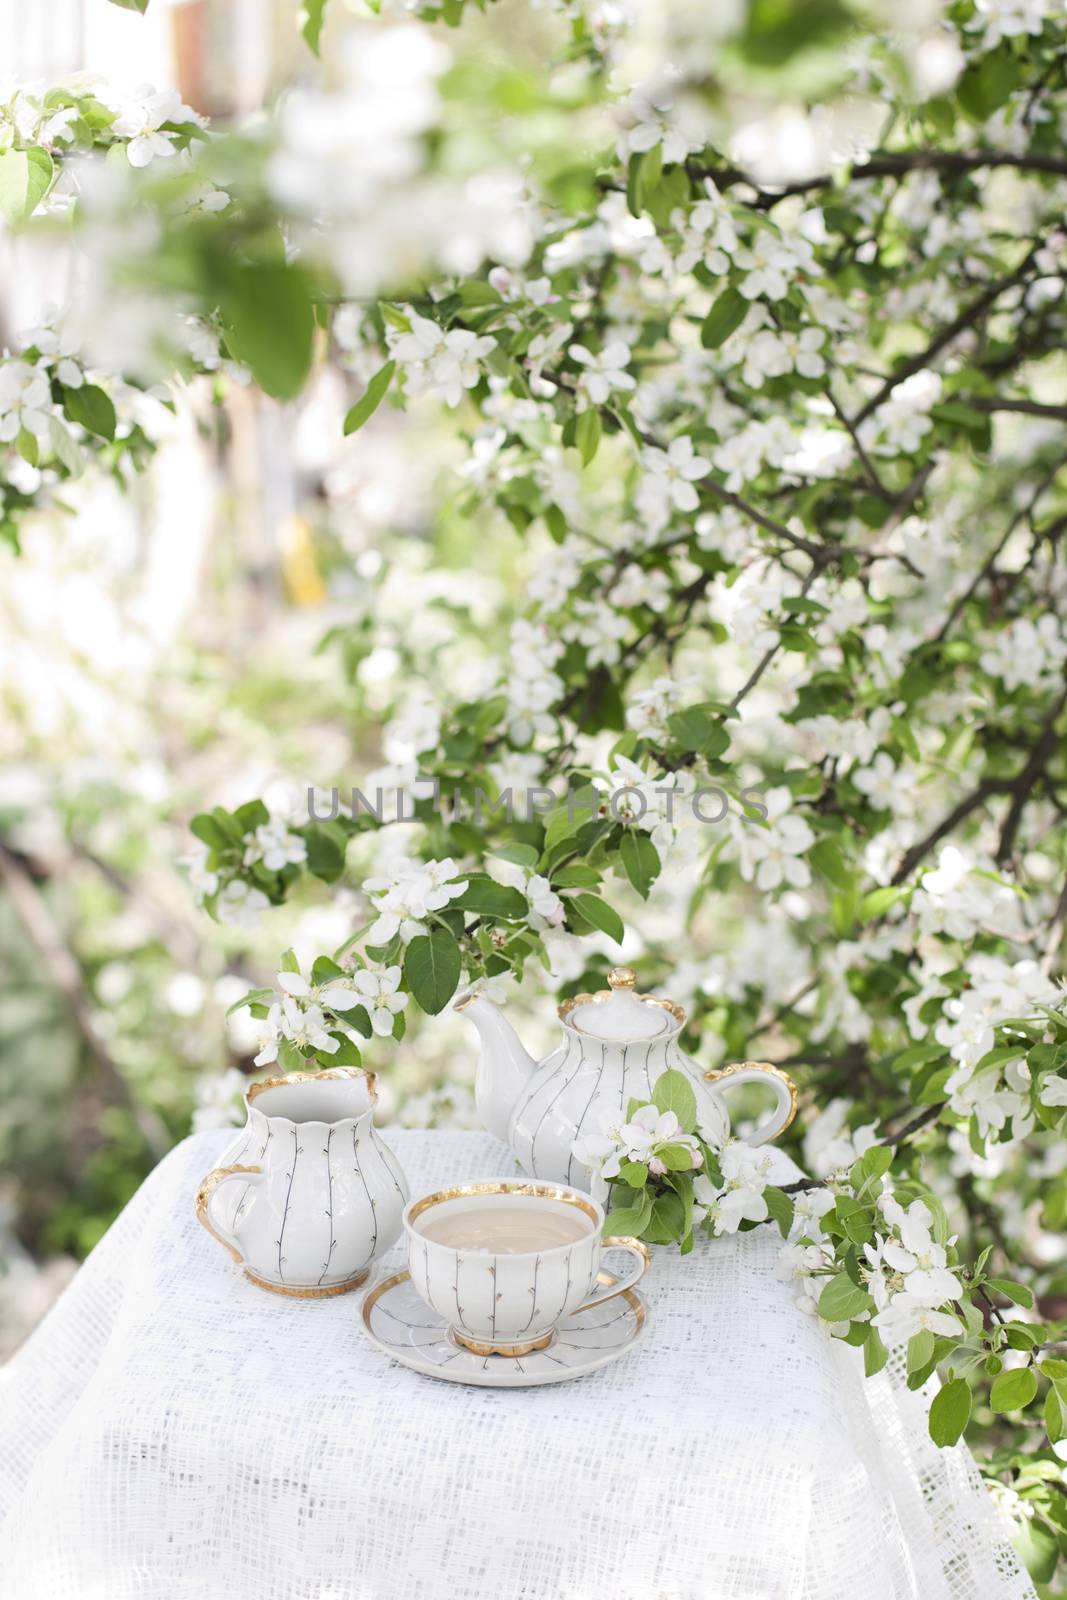 Tea in the blossoming garden by mariakomar